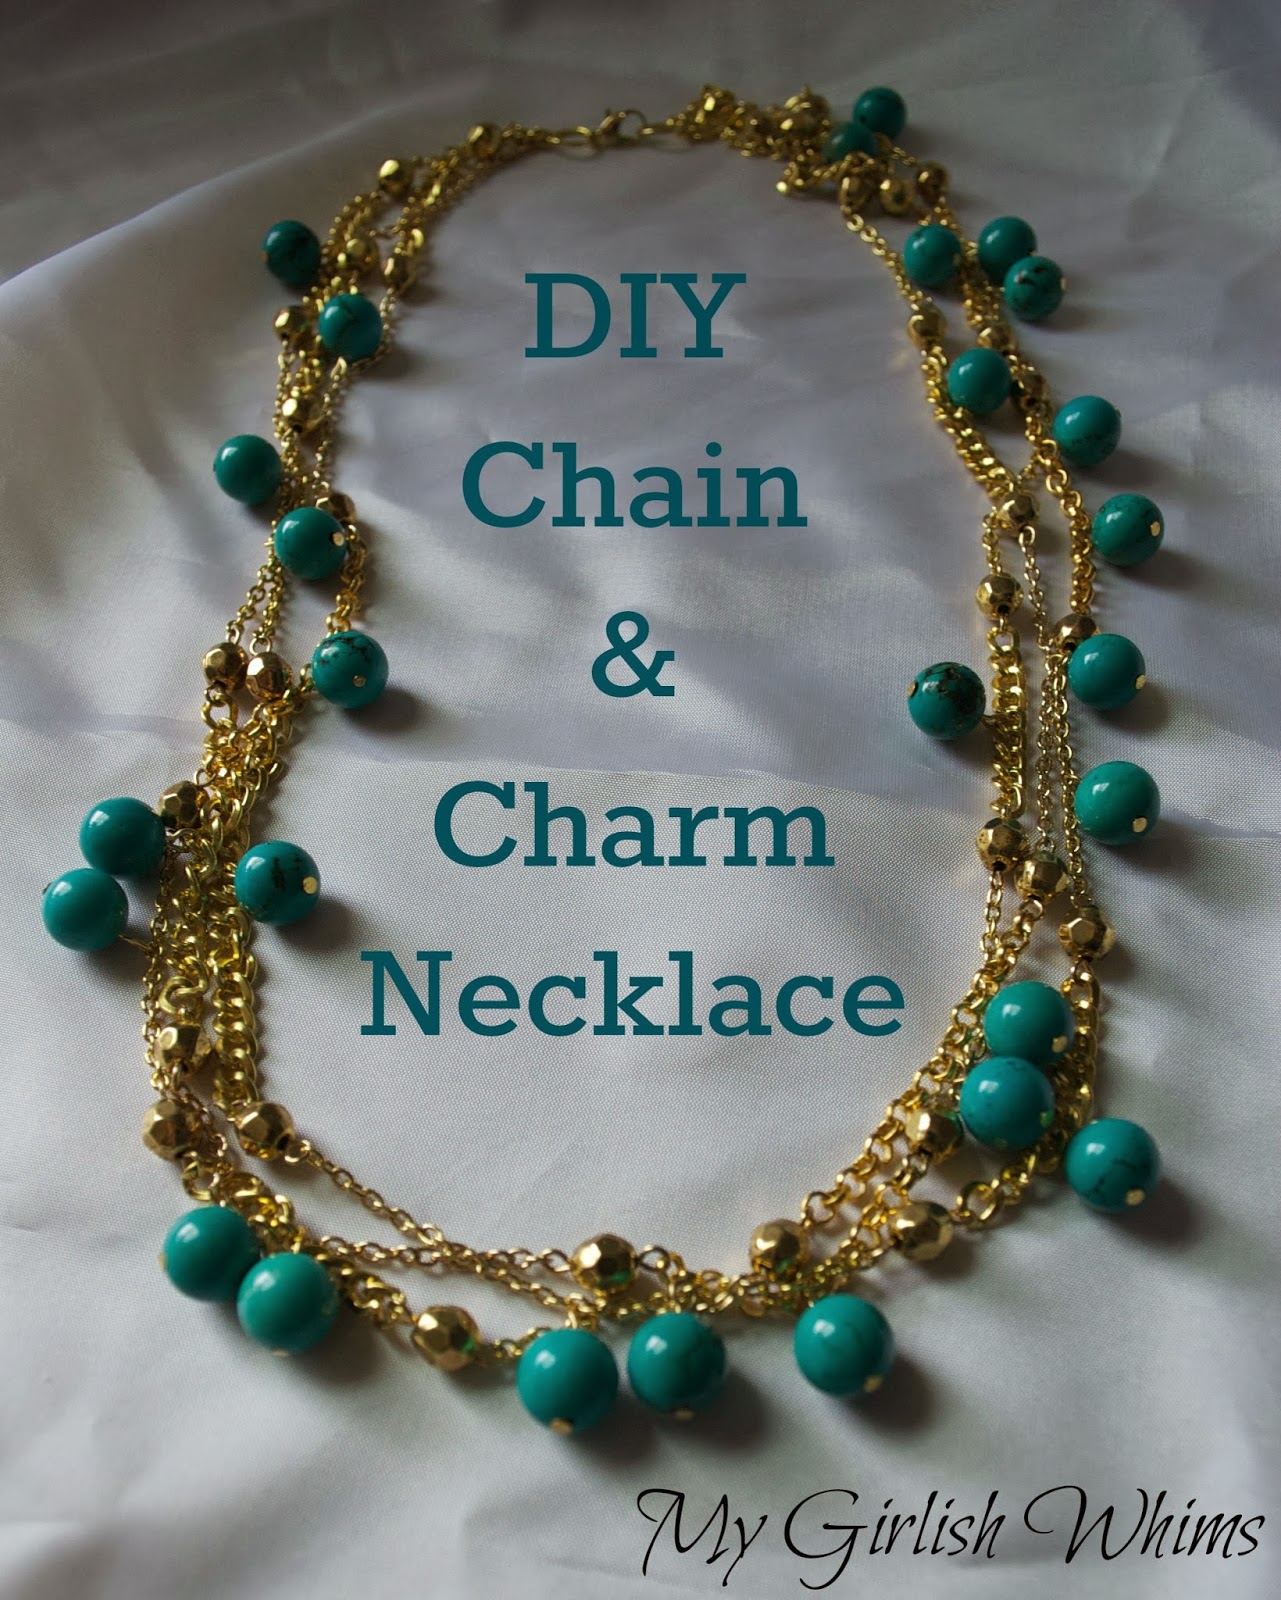 DIY Craft Tutorial: How to Make DIY Charm Jewelry